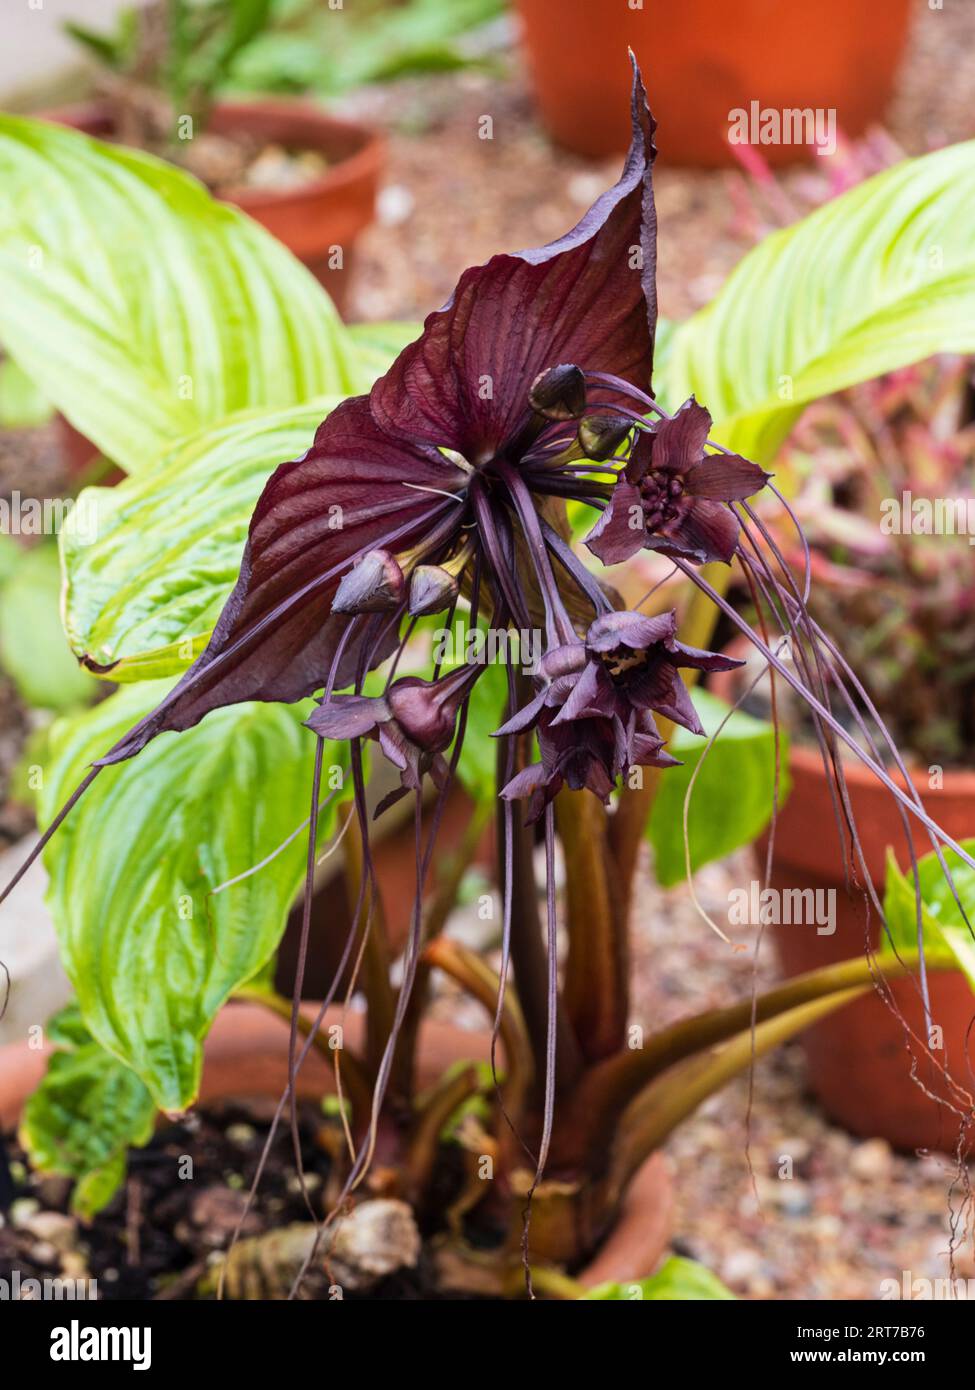 Unusual dark flowers and bracts of the subtropical, rhizomatous perennial black bat flower, Tacca chantrieri Stock Photo